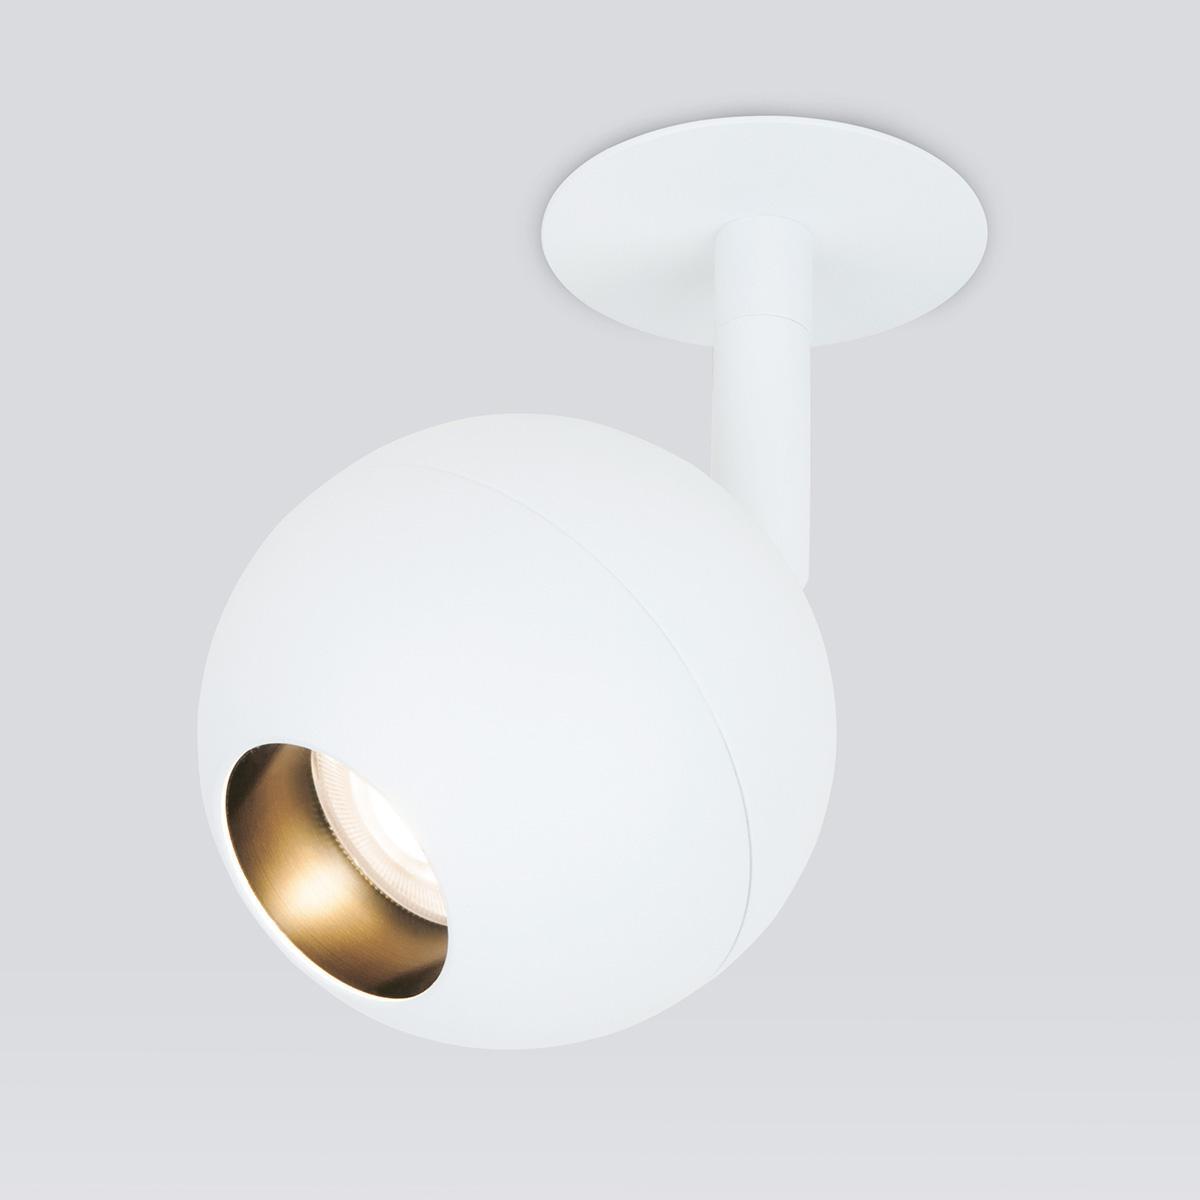 Встраиваемый светодиодный спот Elektrostandard Ball 9925 LED 8W 4200K белый 4690389169809 luxe ball ваза